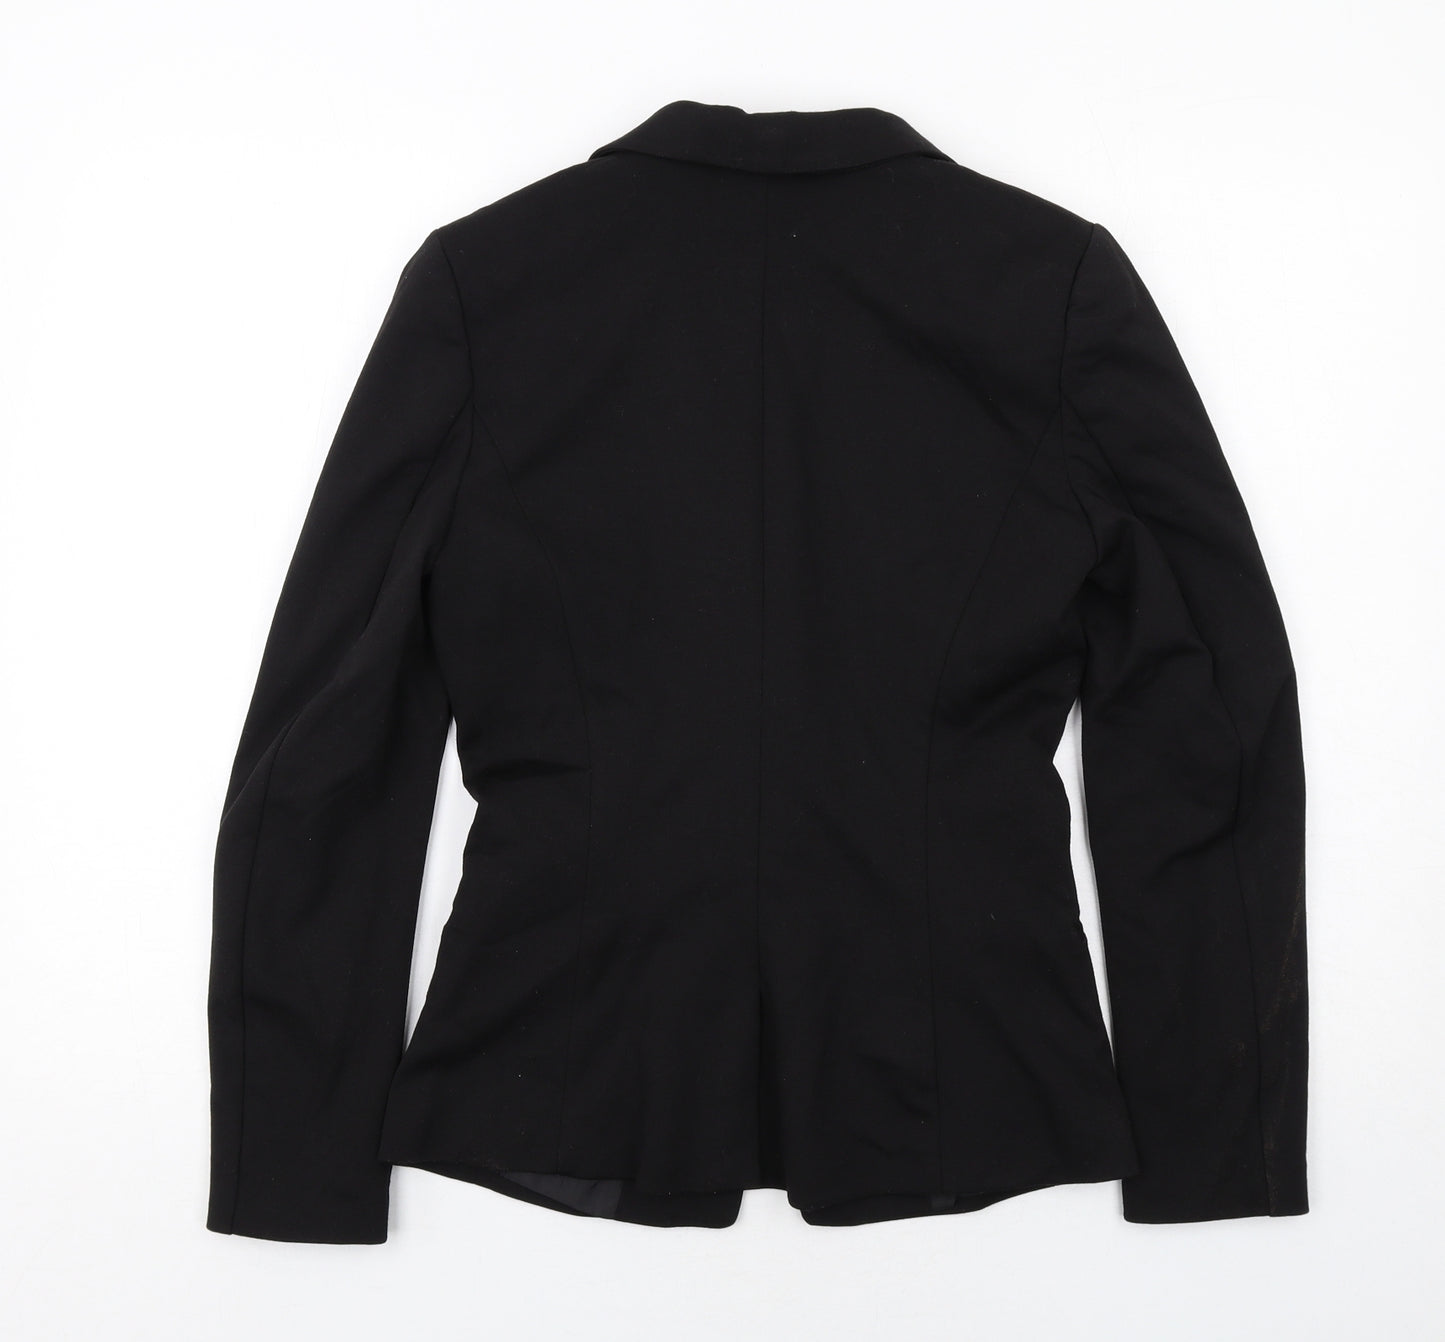 H&M Womens Black Polyester Jacket Suit Jacket Size 8